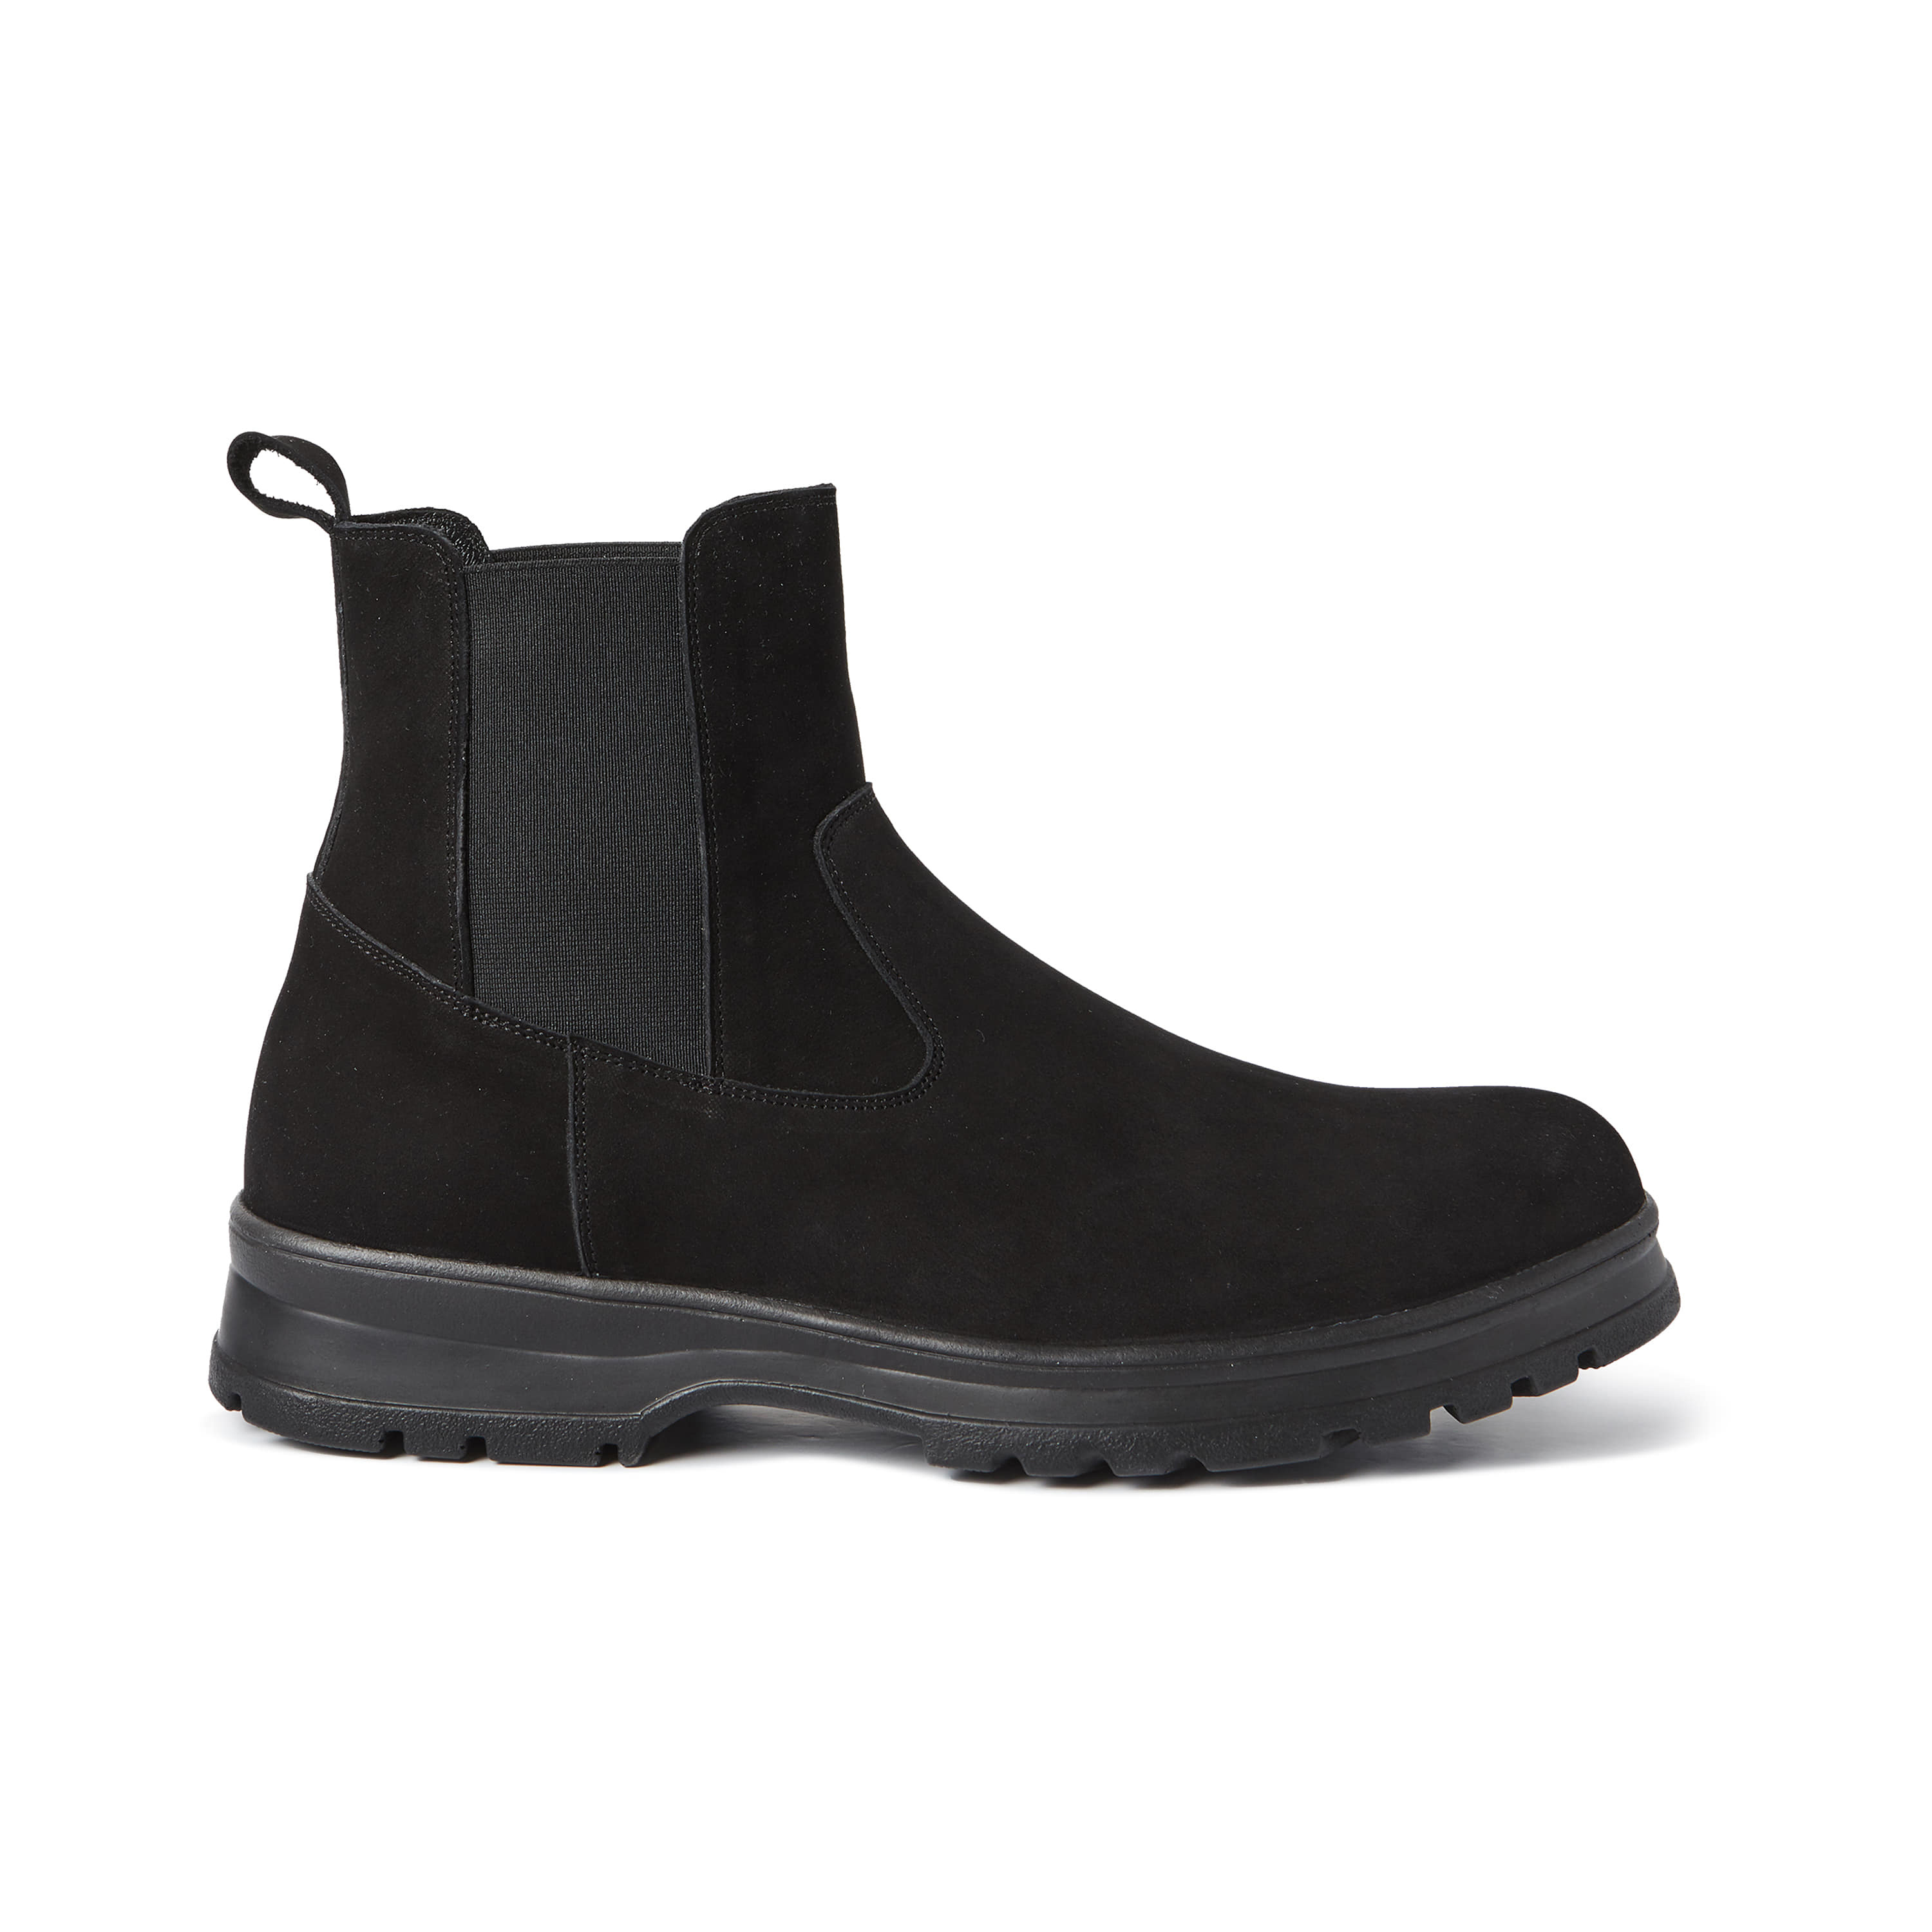 mmrb comfortable boots (black)